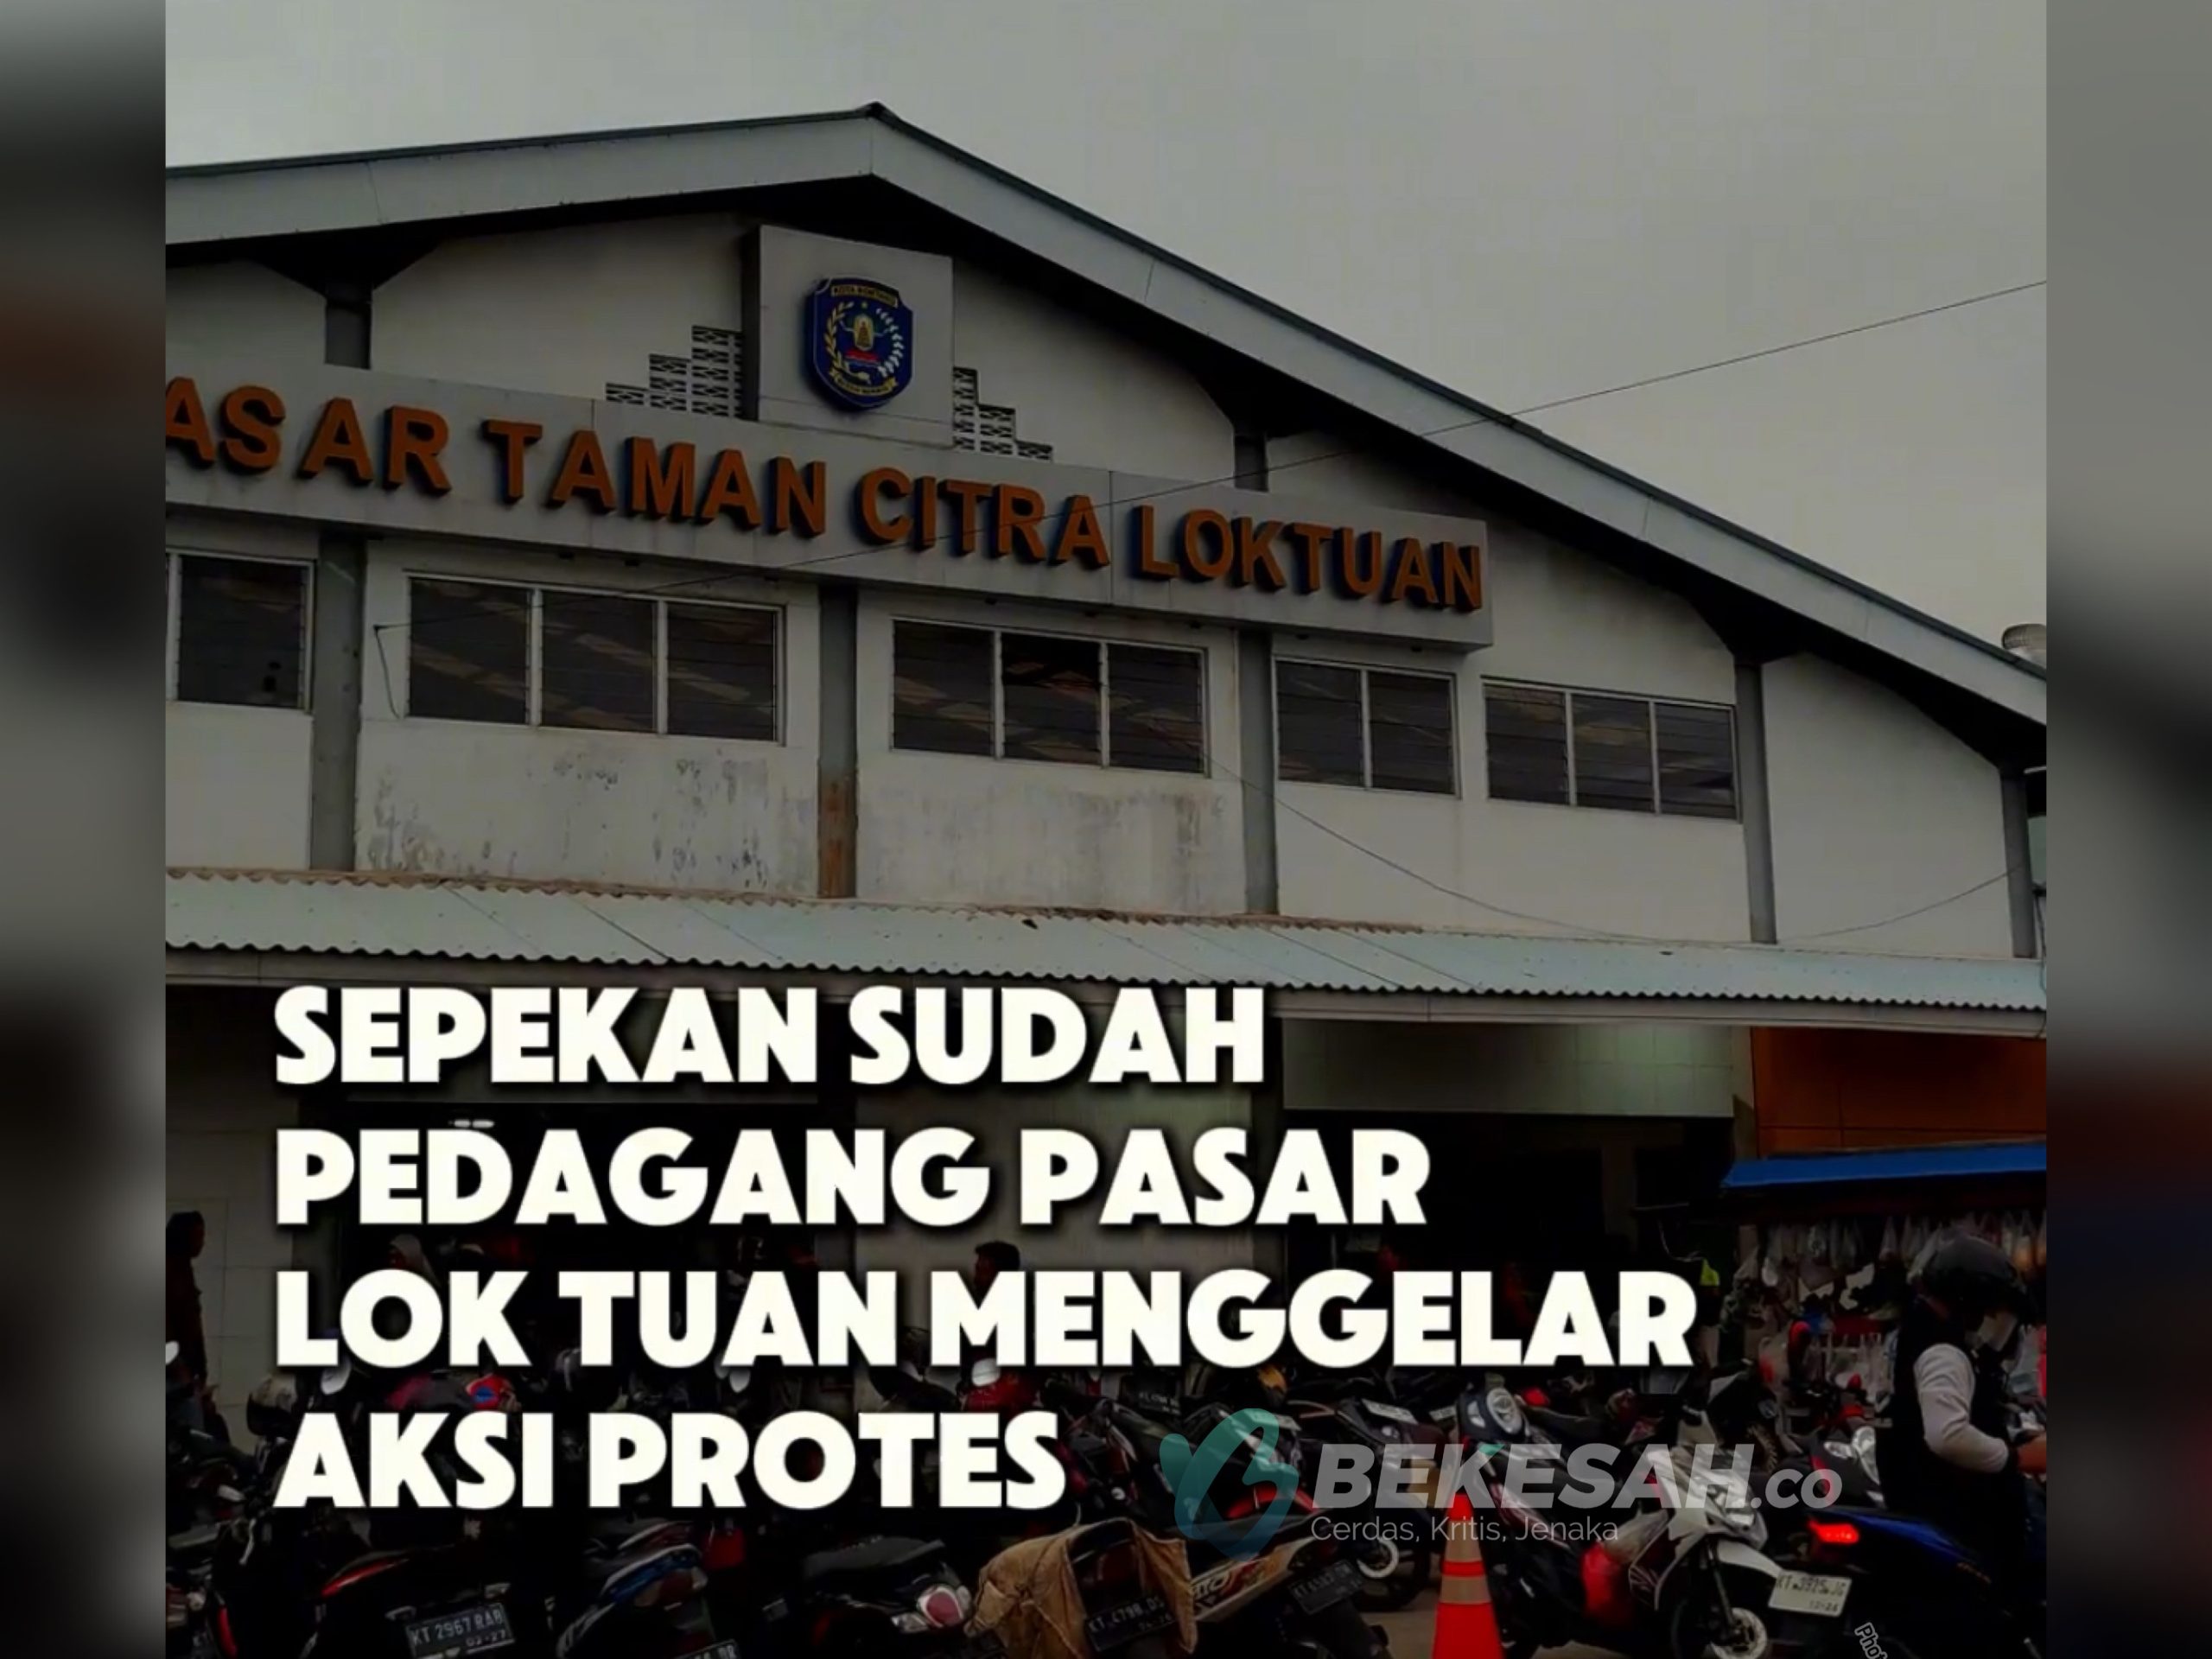 VIDEO: Keluhan Pedagang Pasar Loktuan, Minta Dikembalikan ke Pasar Lama